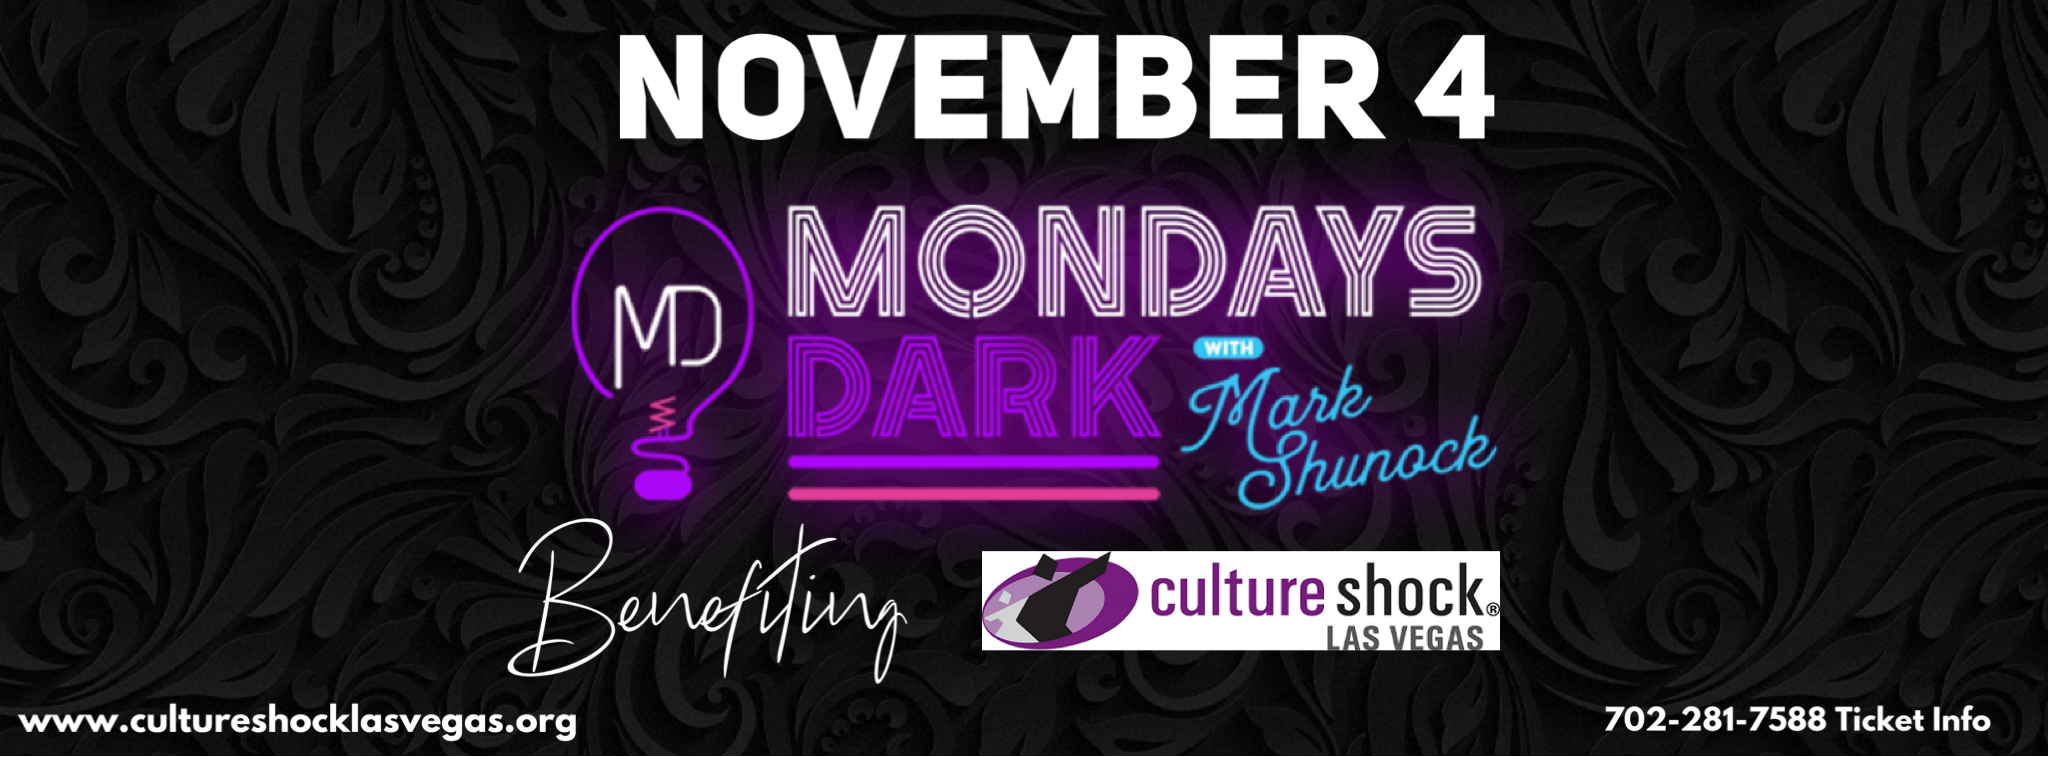 Nov 4, Mondays Dark benefiting Culture Shock 